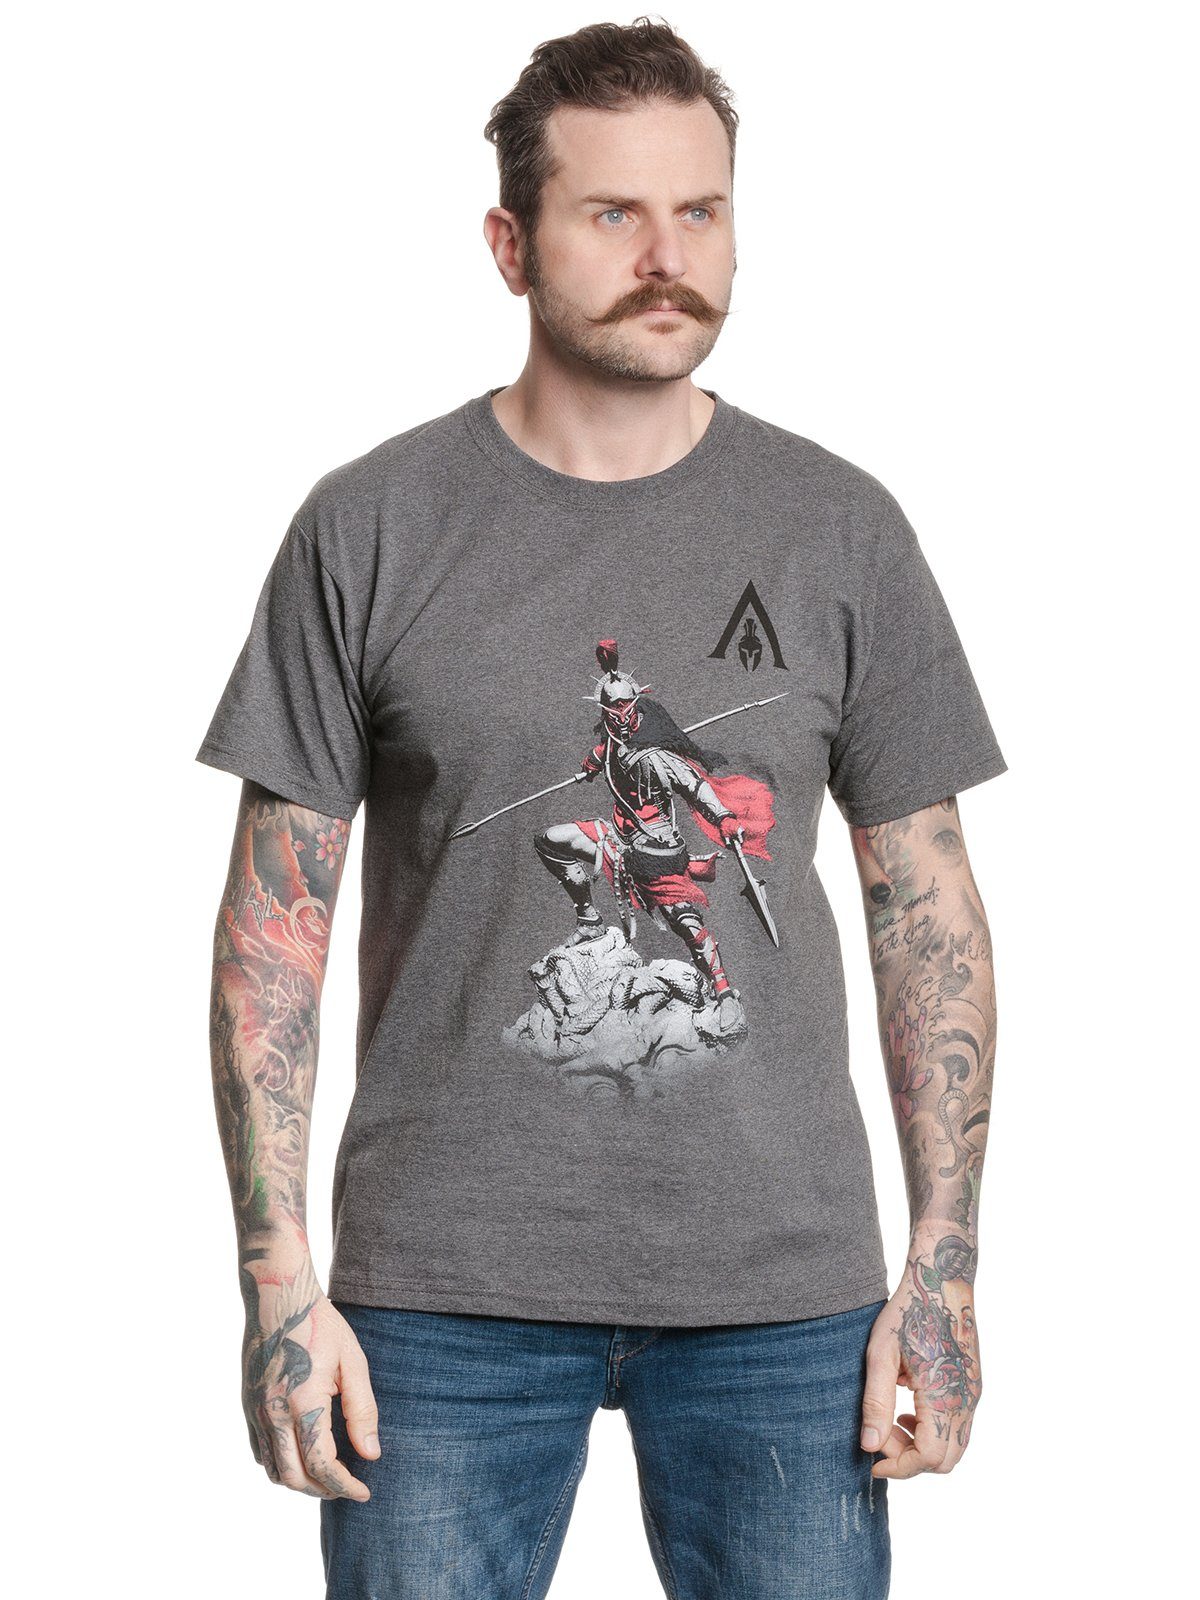 Nastrovje Potsdam T-Shirt Assassins Creed Odyssey Warrior